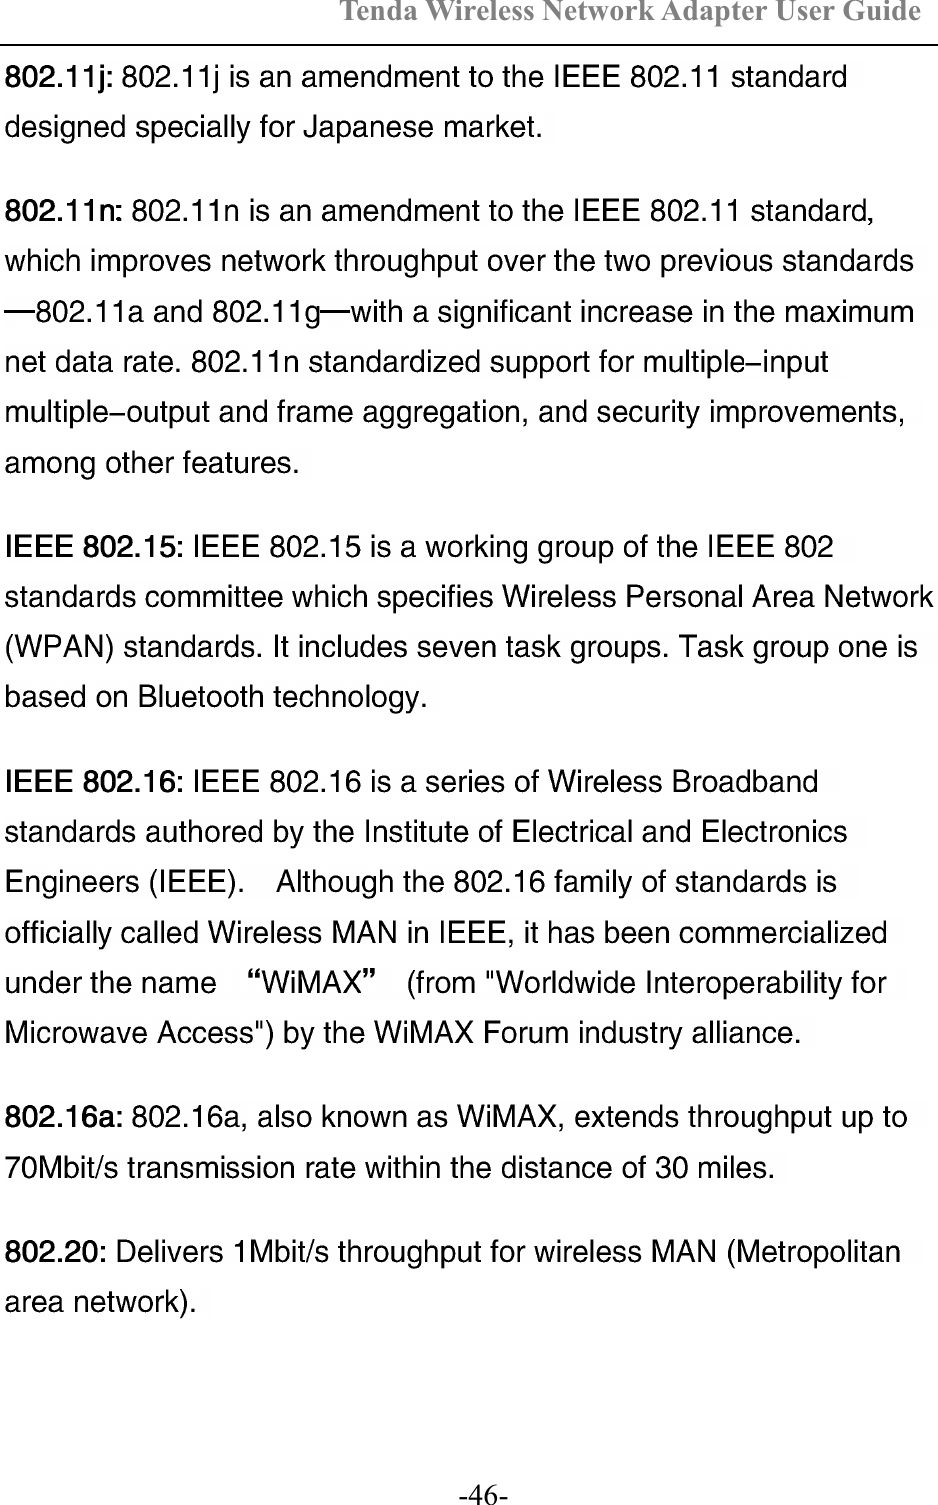 Tenda Wireless Network Adapter User Guide  -46- 